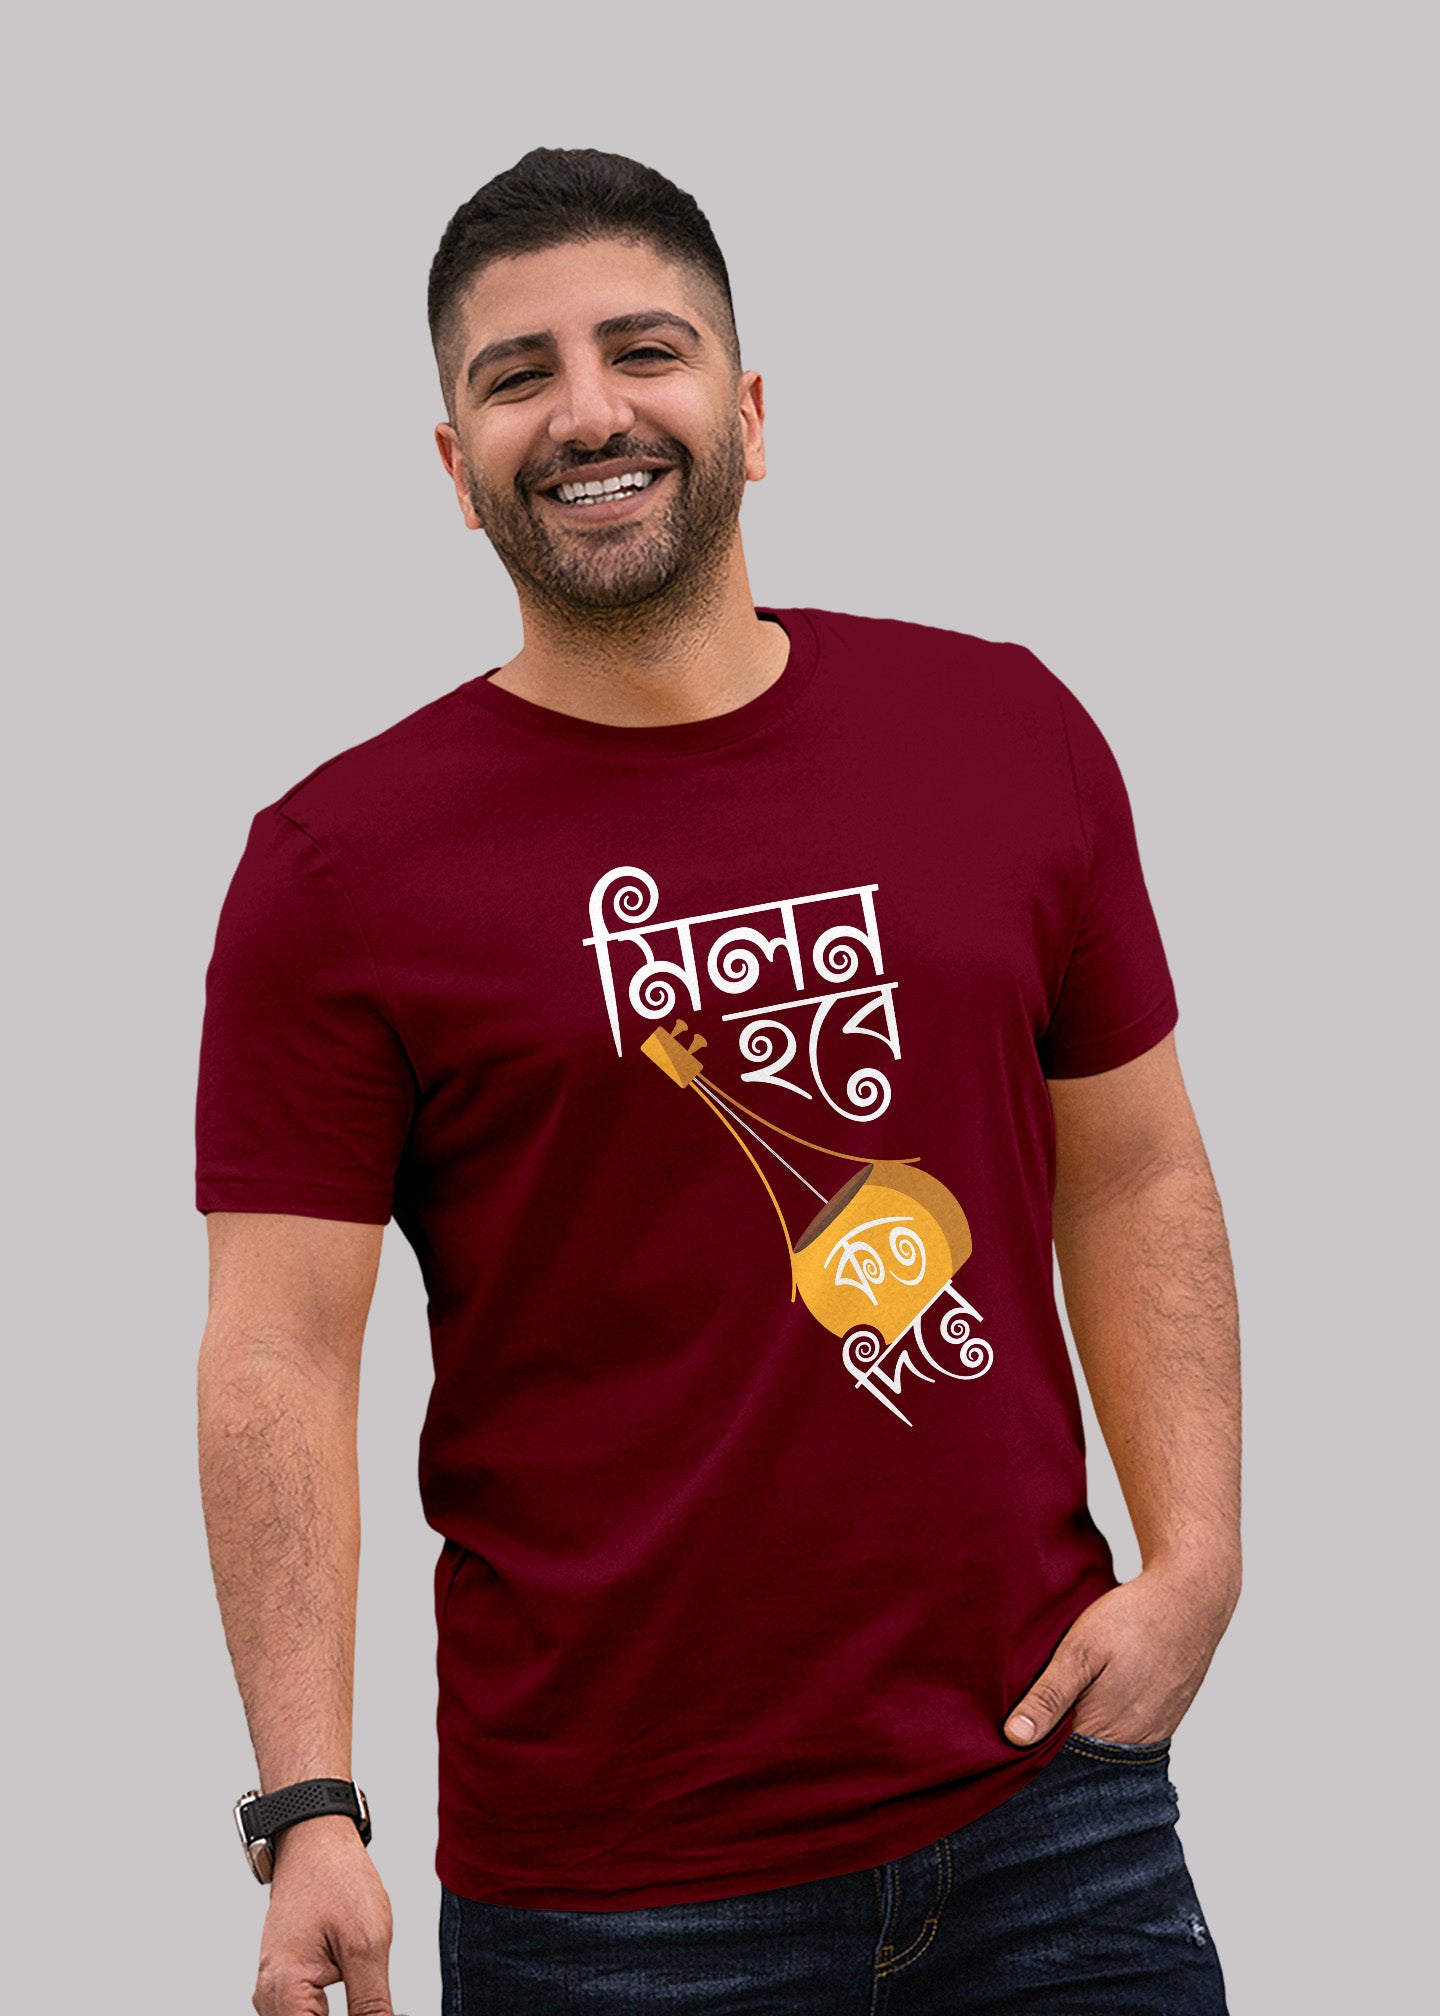 Milan hobe koto dine bengali Printed Half Sleeve Premium Cotton T-shirt For Men